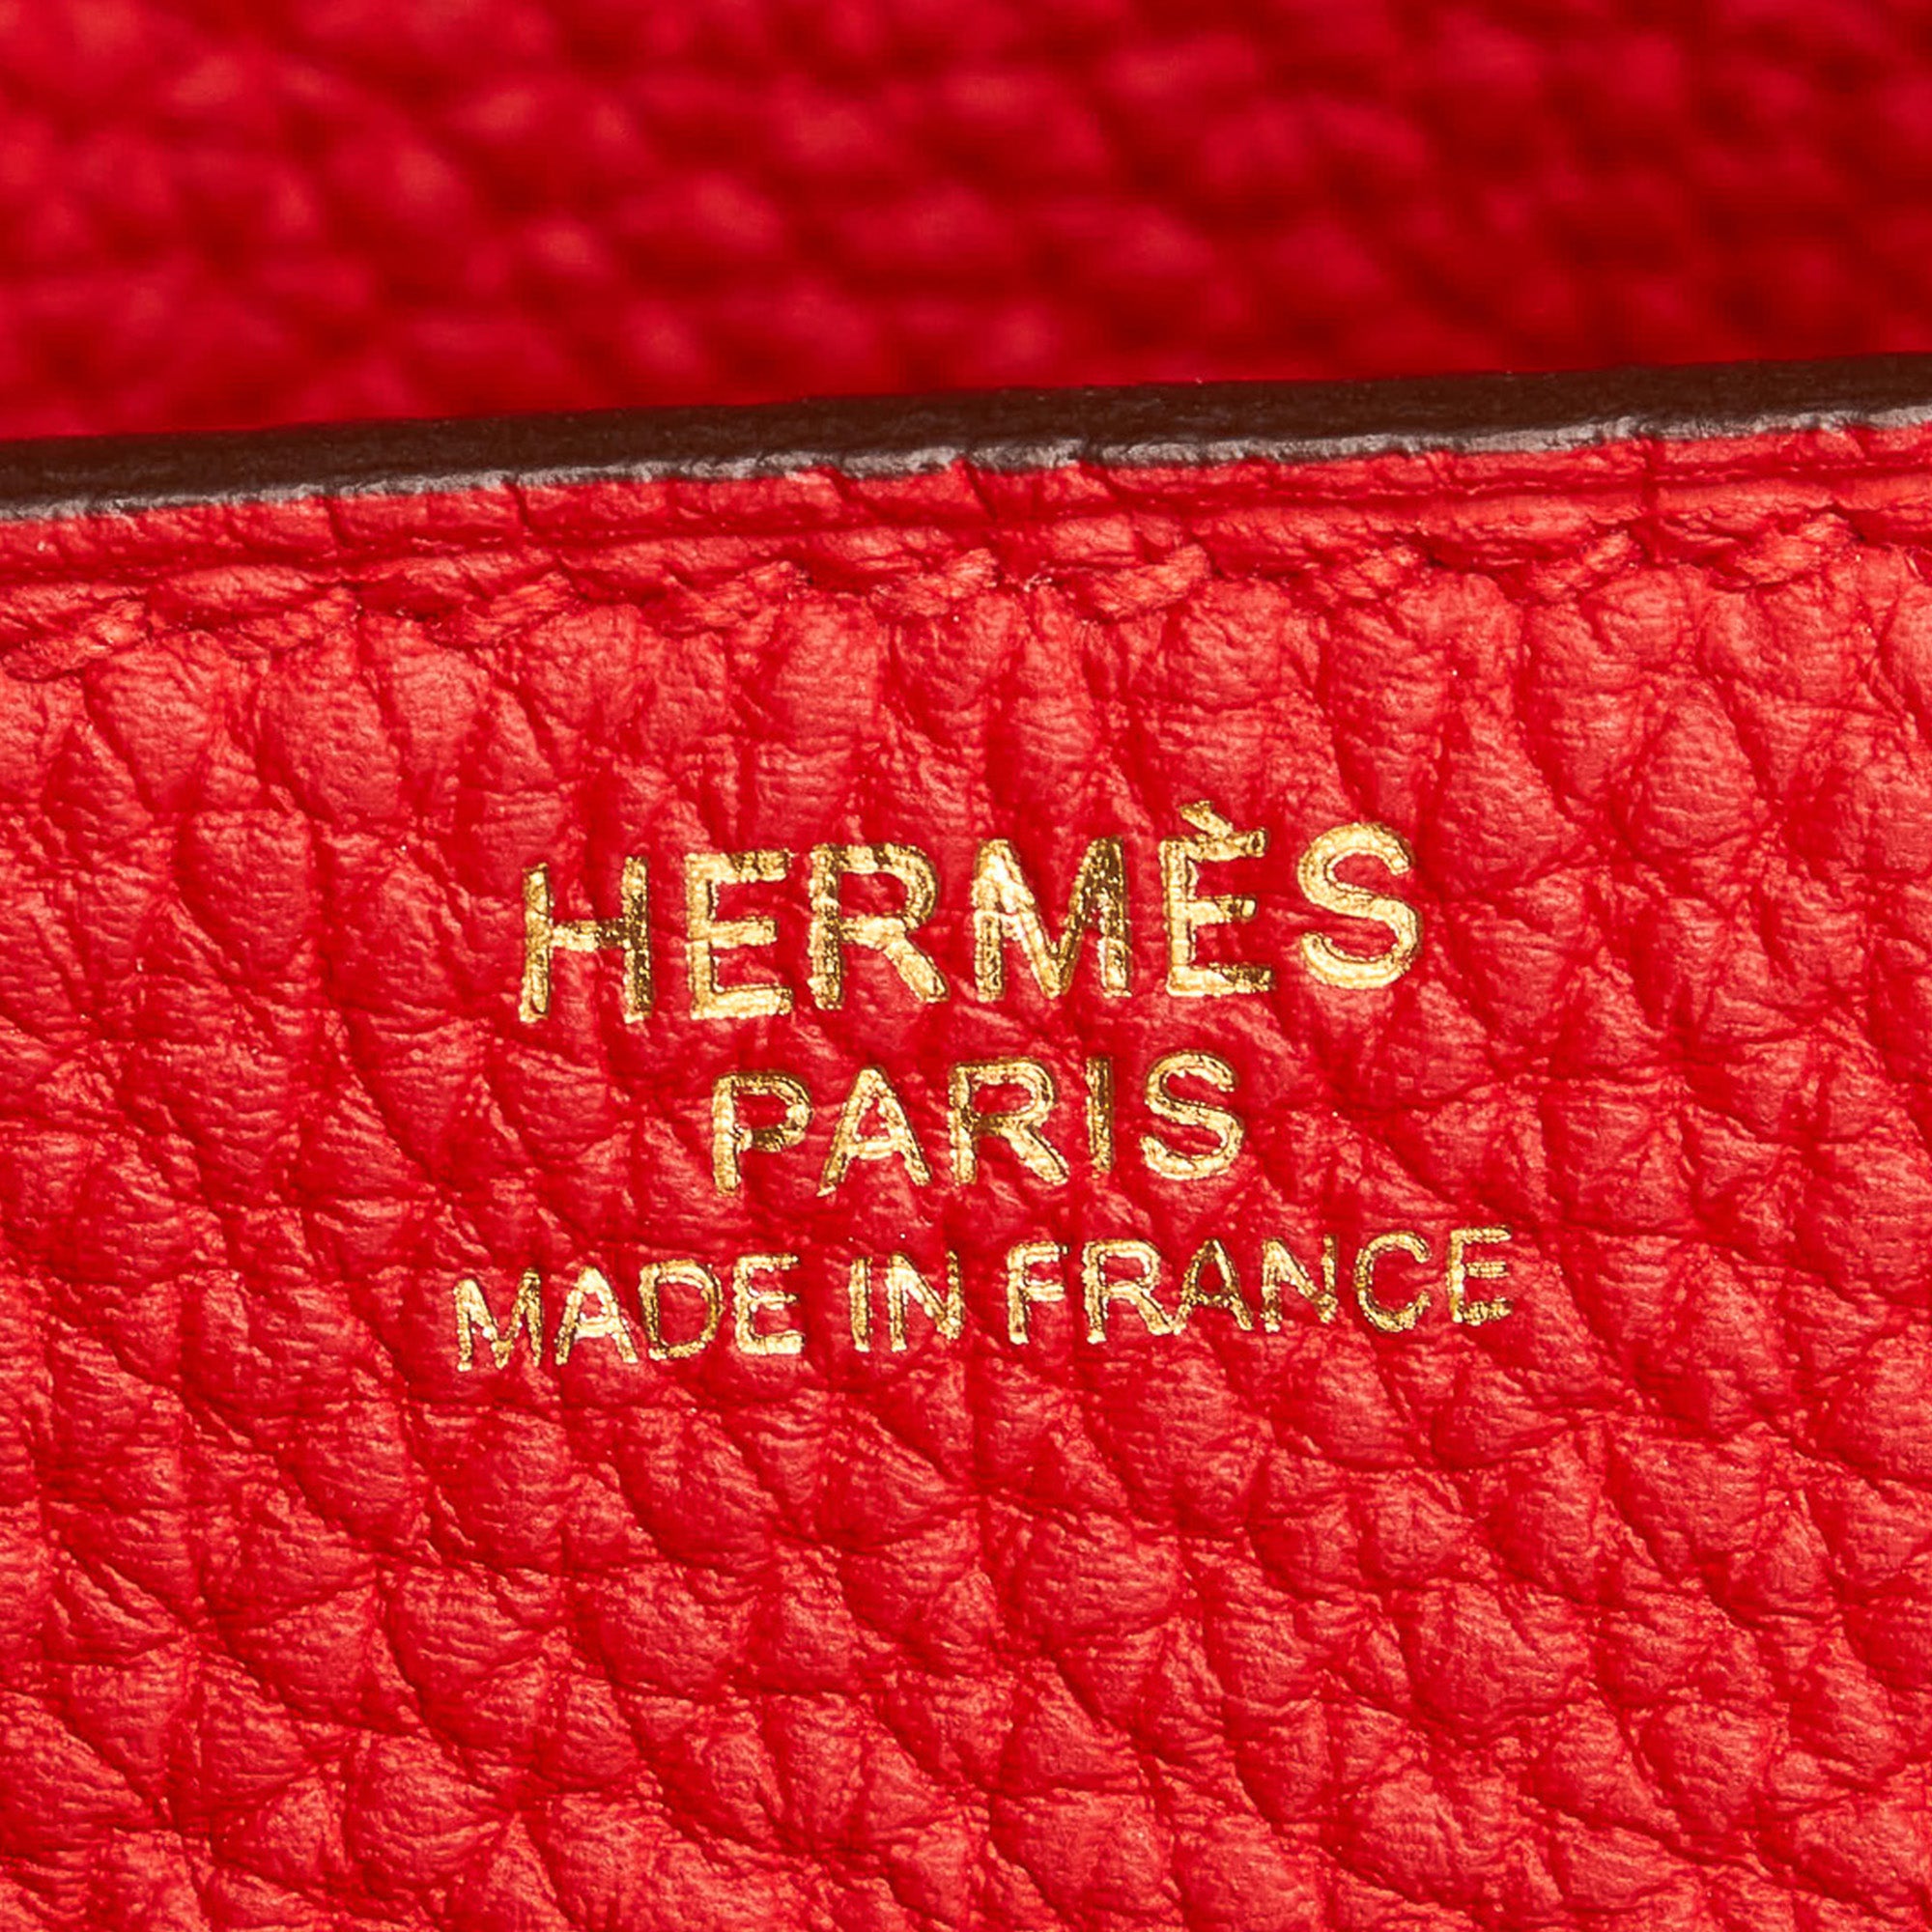 Hermès 2019 Pre-owned Birkin 30 Bag